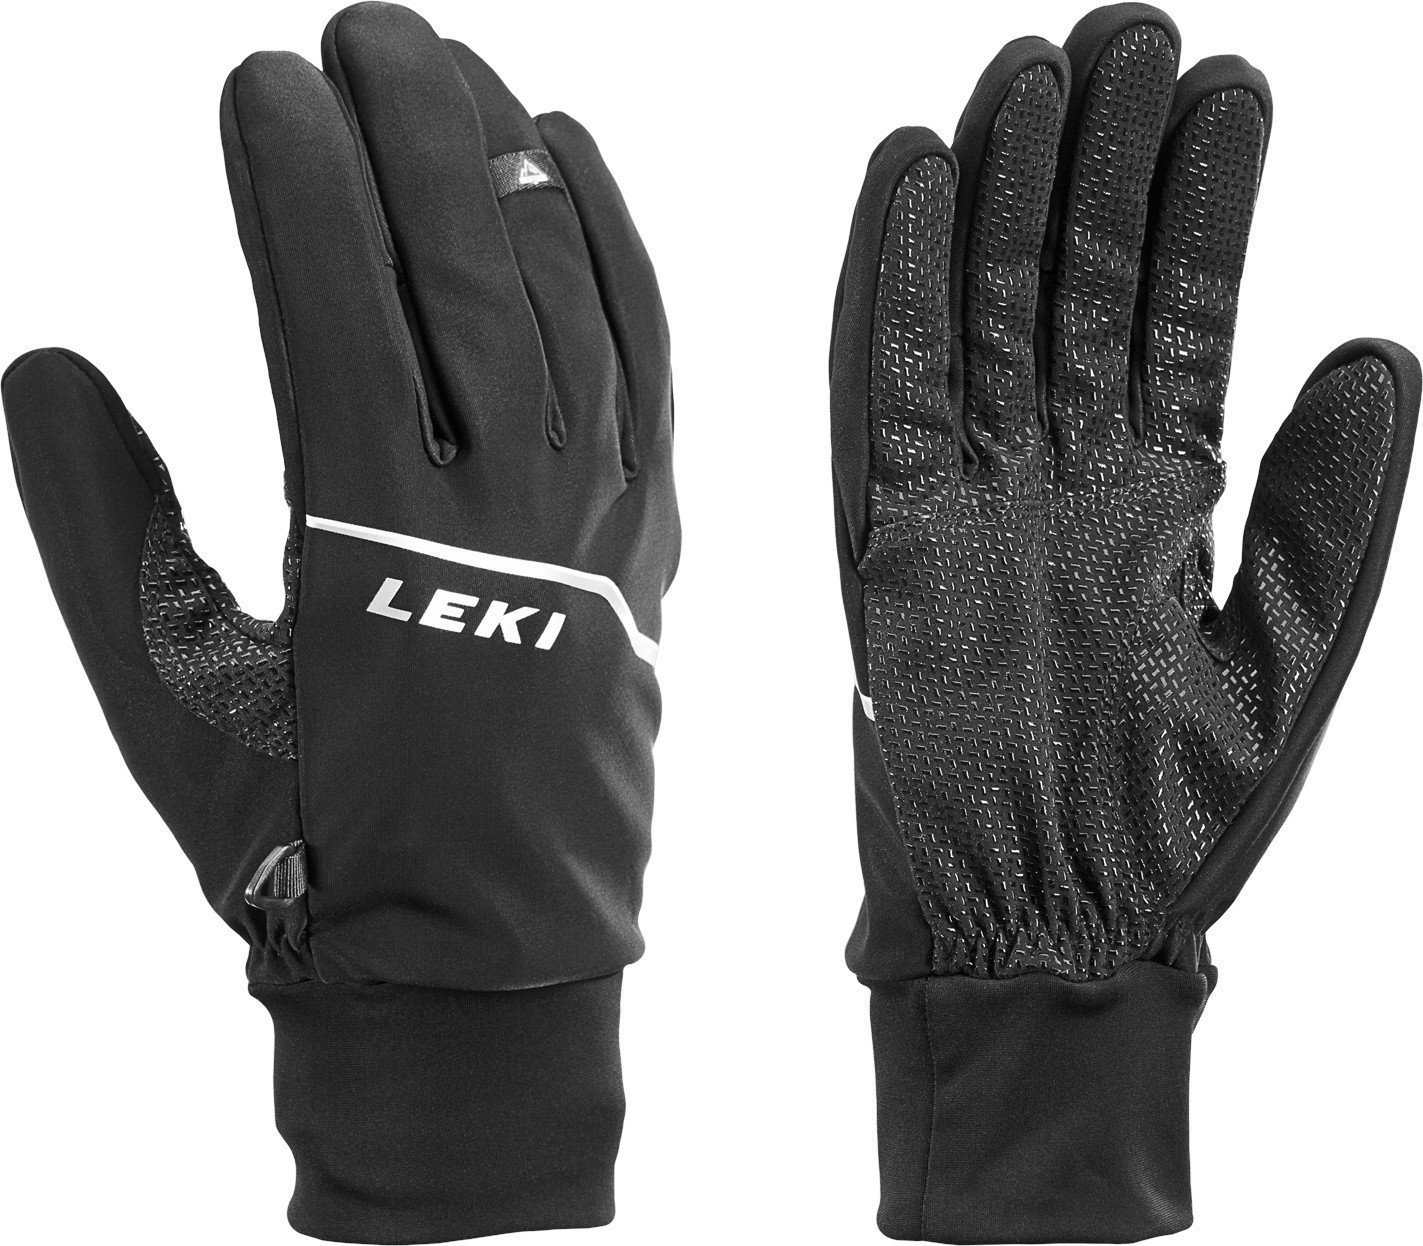 Handschoenen Leki Tour Lite Black/Chrome/White 8,5 Handschoenen